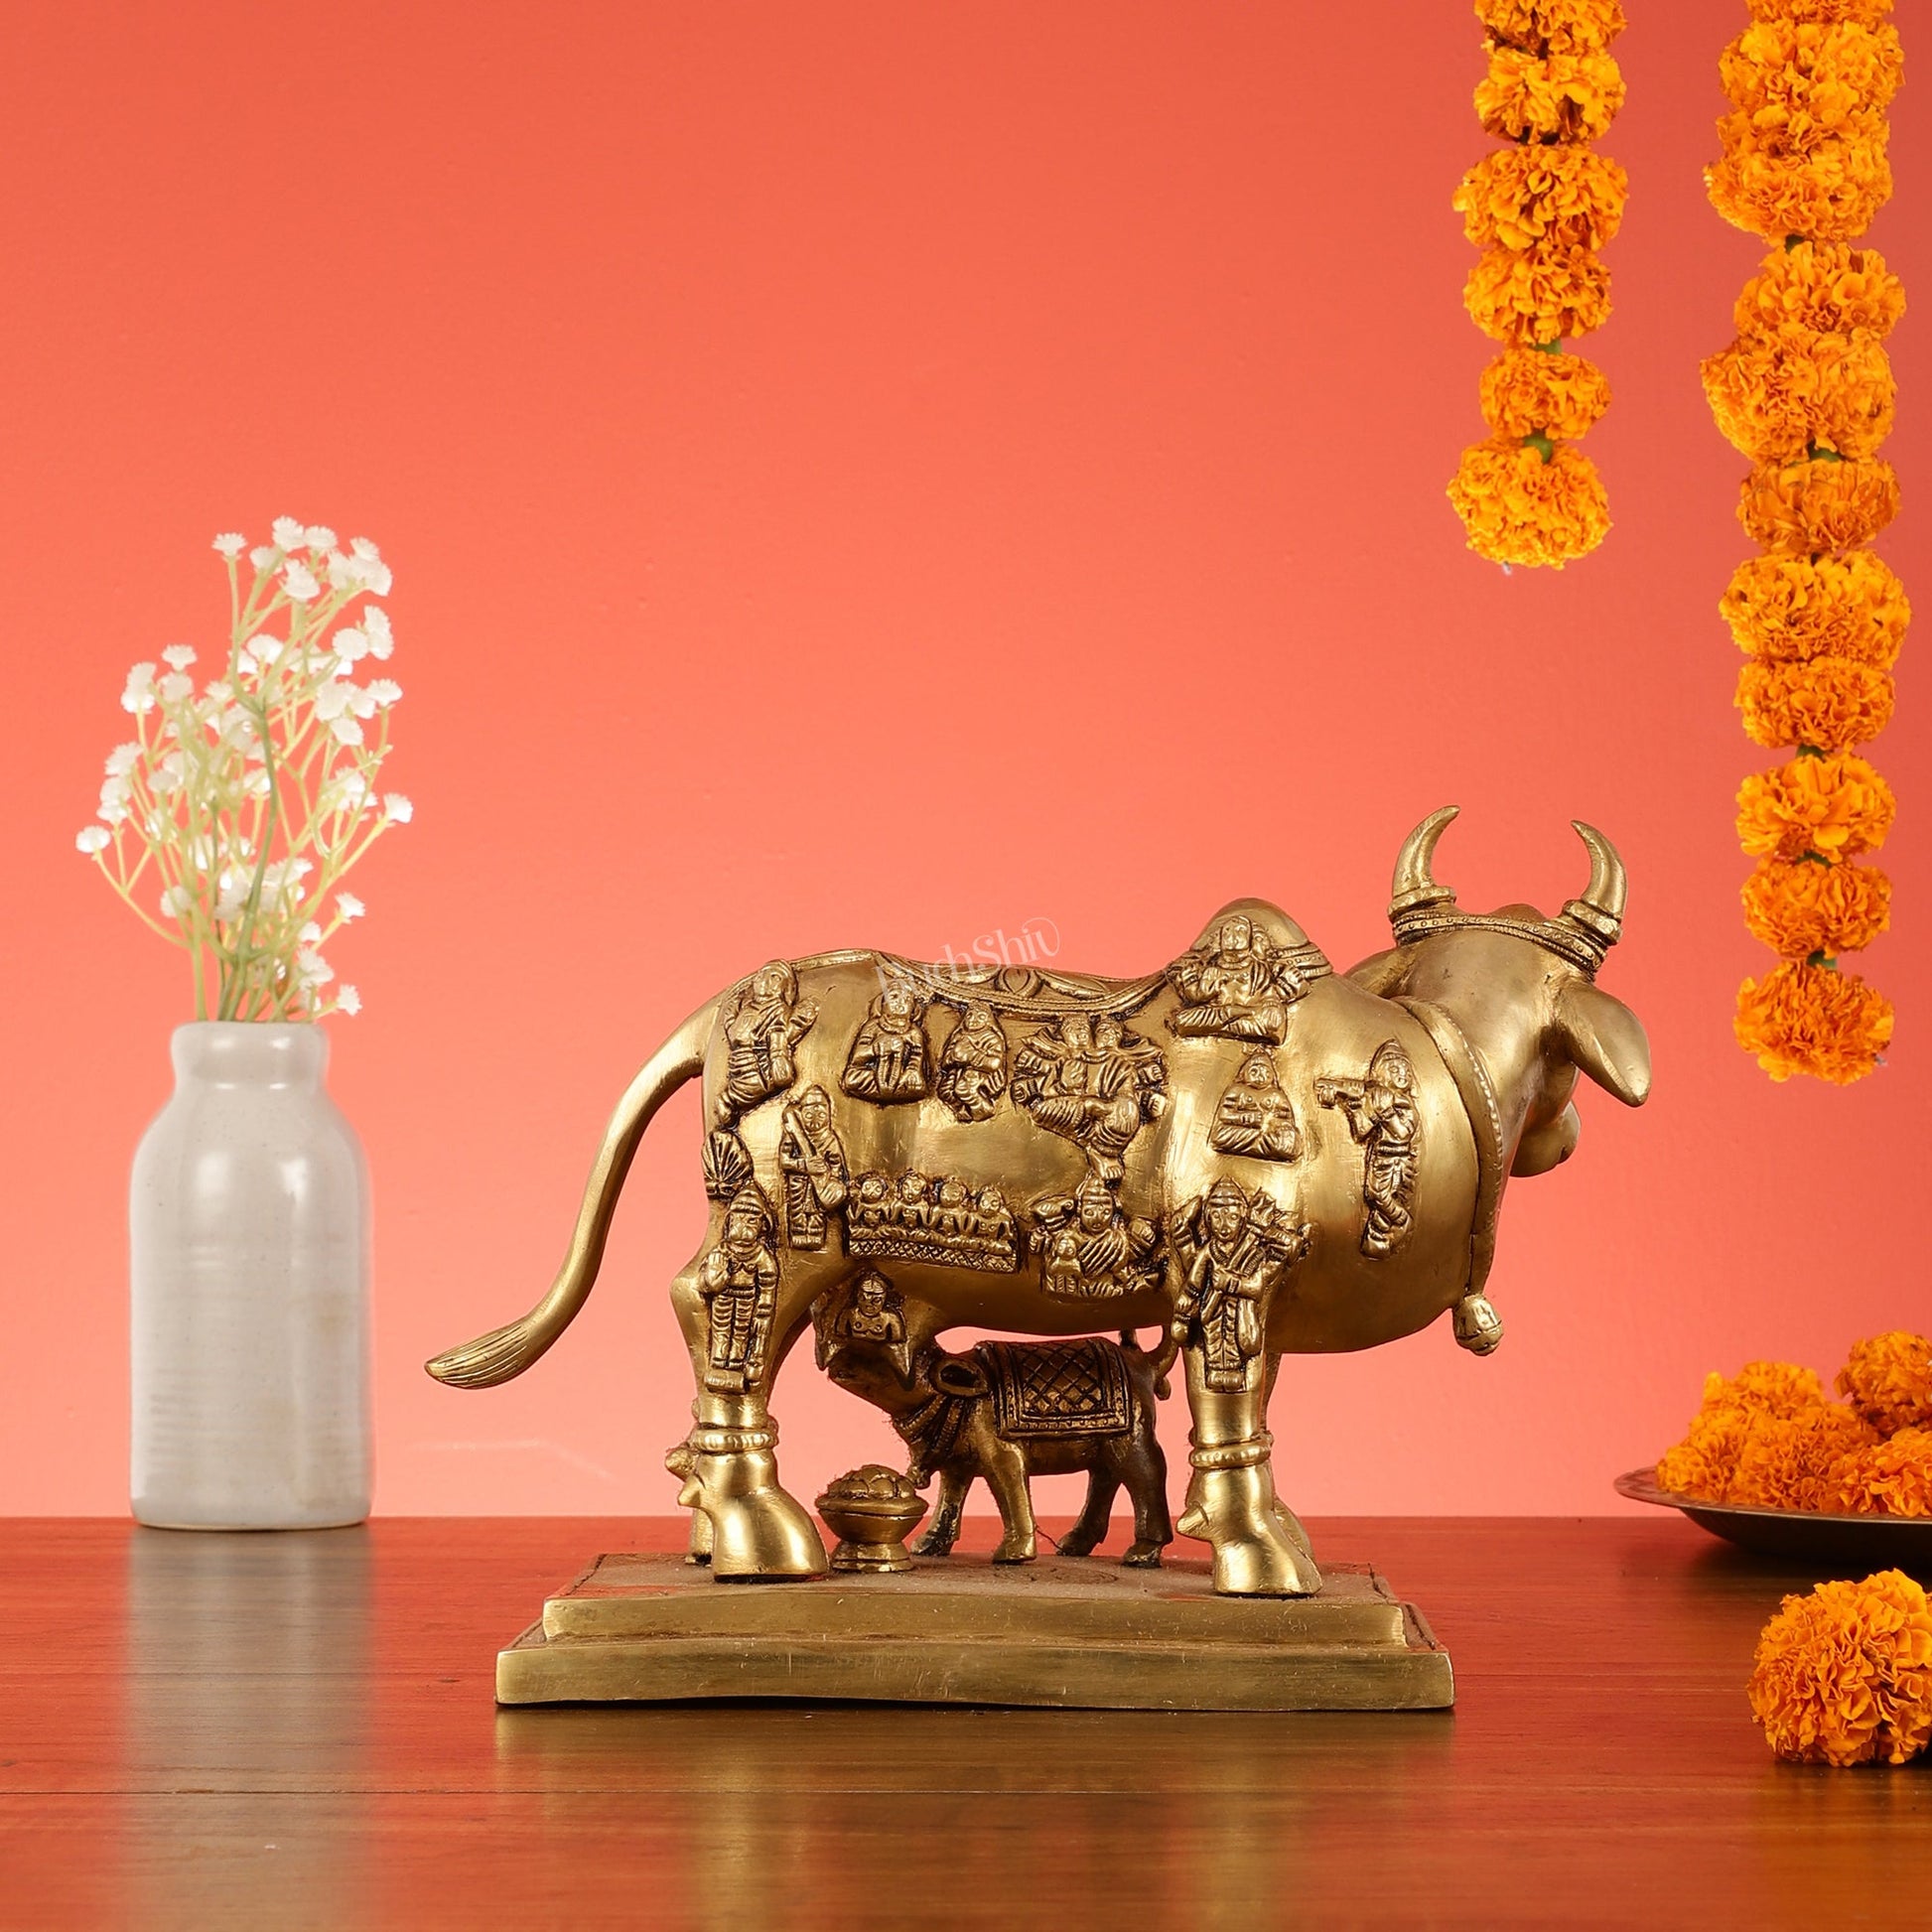 Superfine Engraved Kamdhenu Cow with Calf - Auspicious Wish-Fulfilling Murti 10" - Budhshiv.com